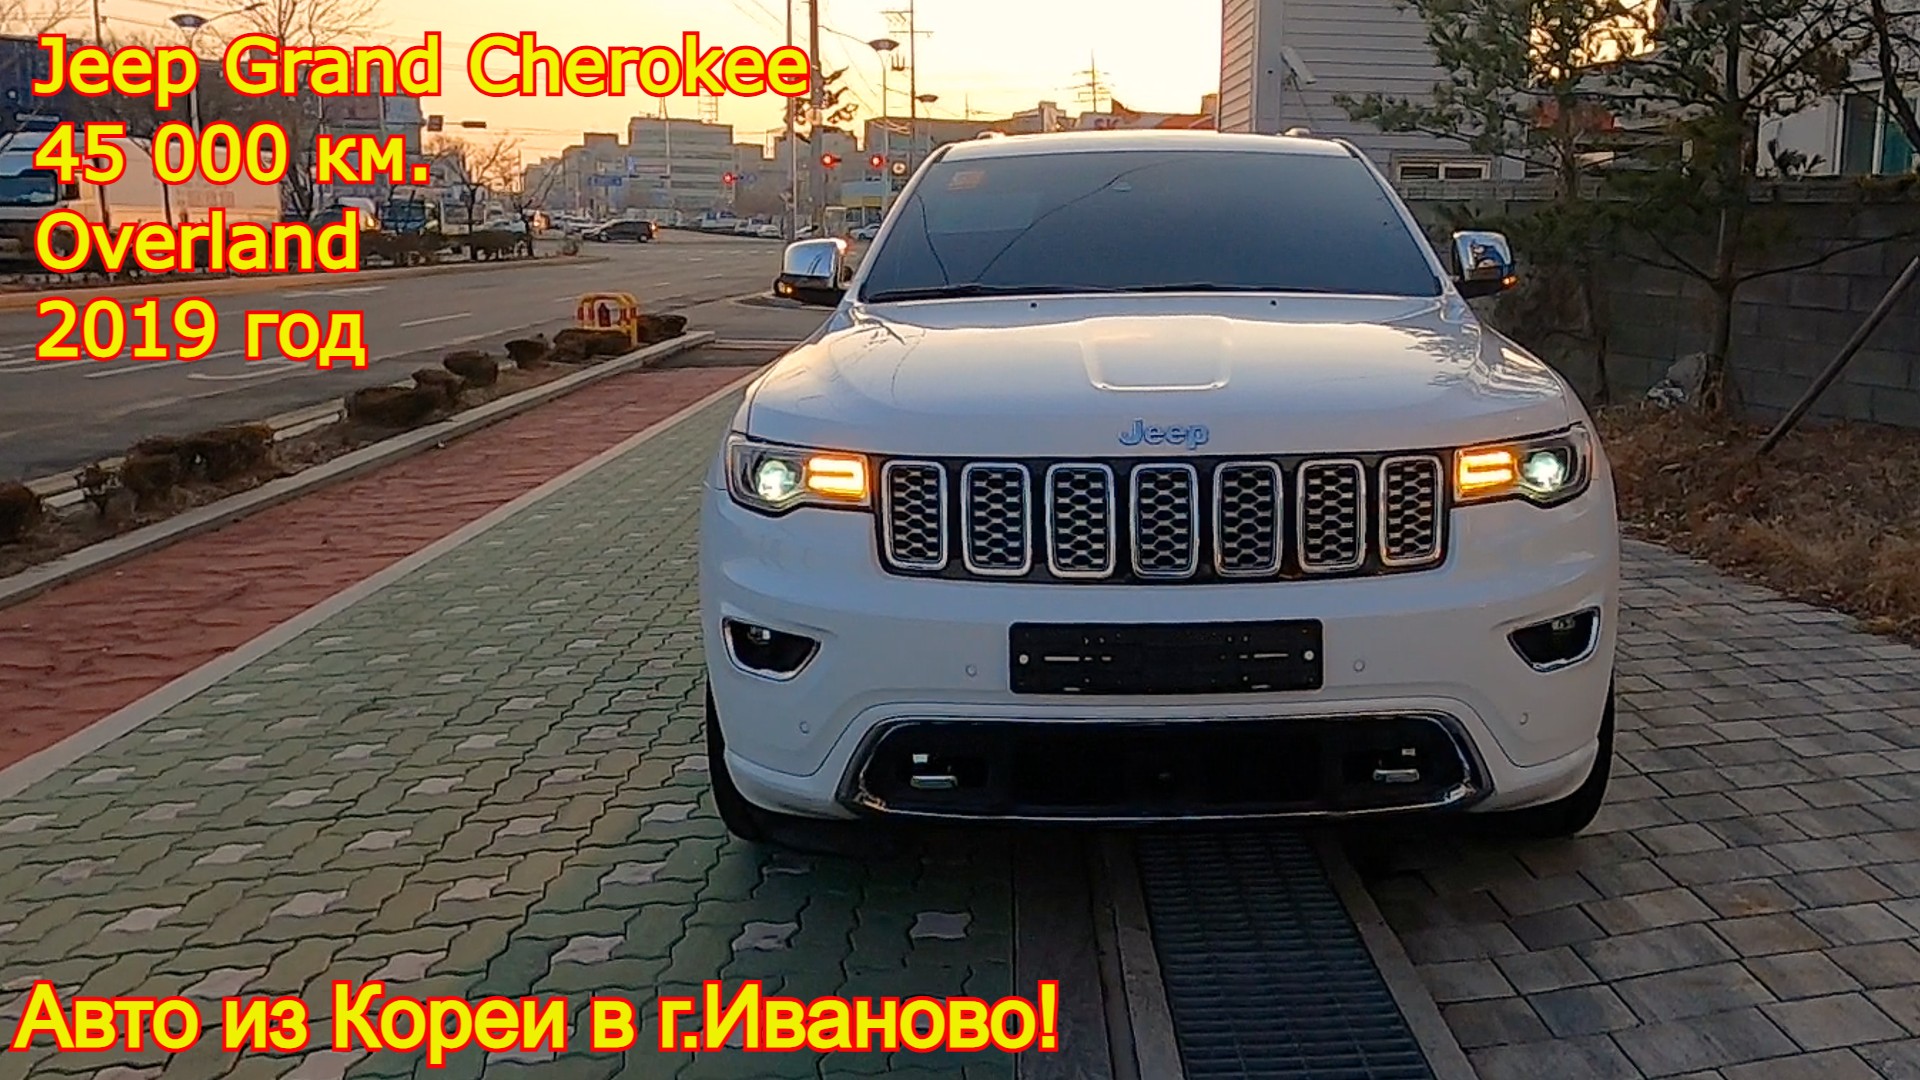 Авто из Кореи в г.Иваново - Jeep Gran Cherokee, 2019 год, 45 000 км., 3.0 CDI, Overland!